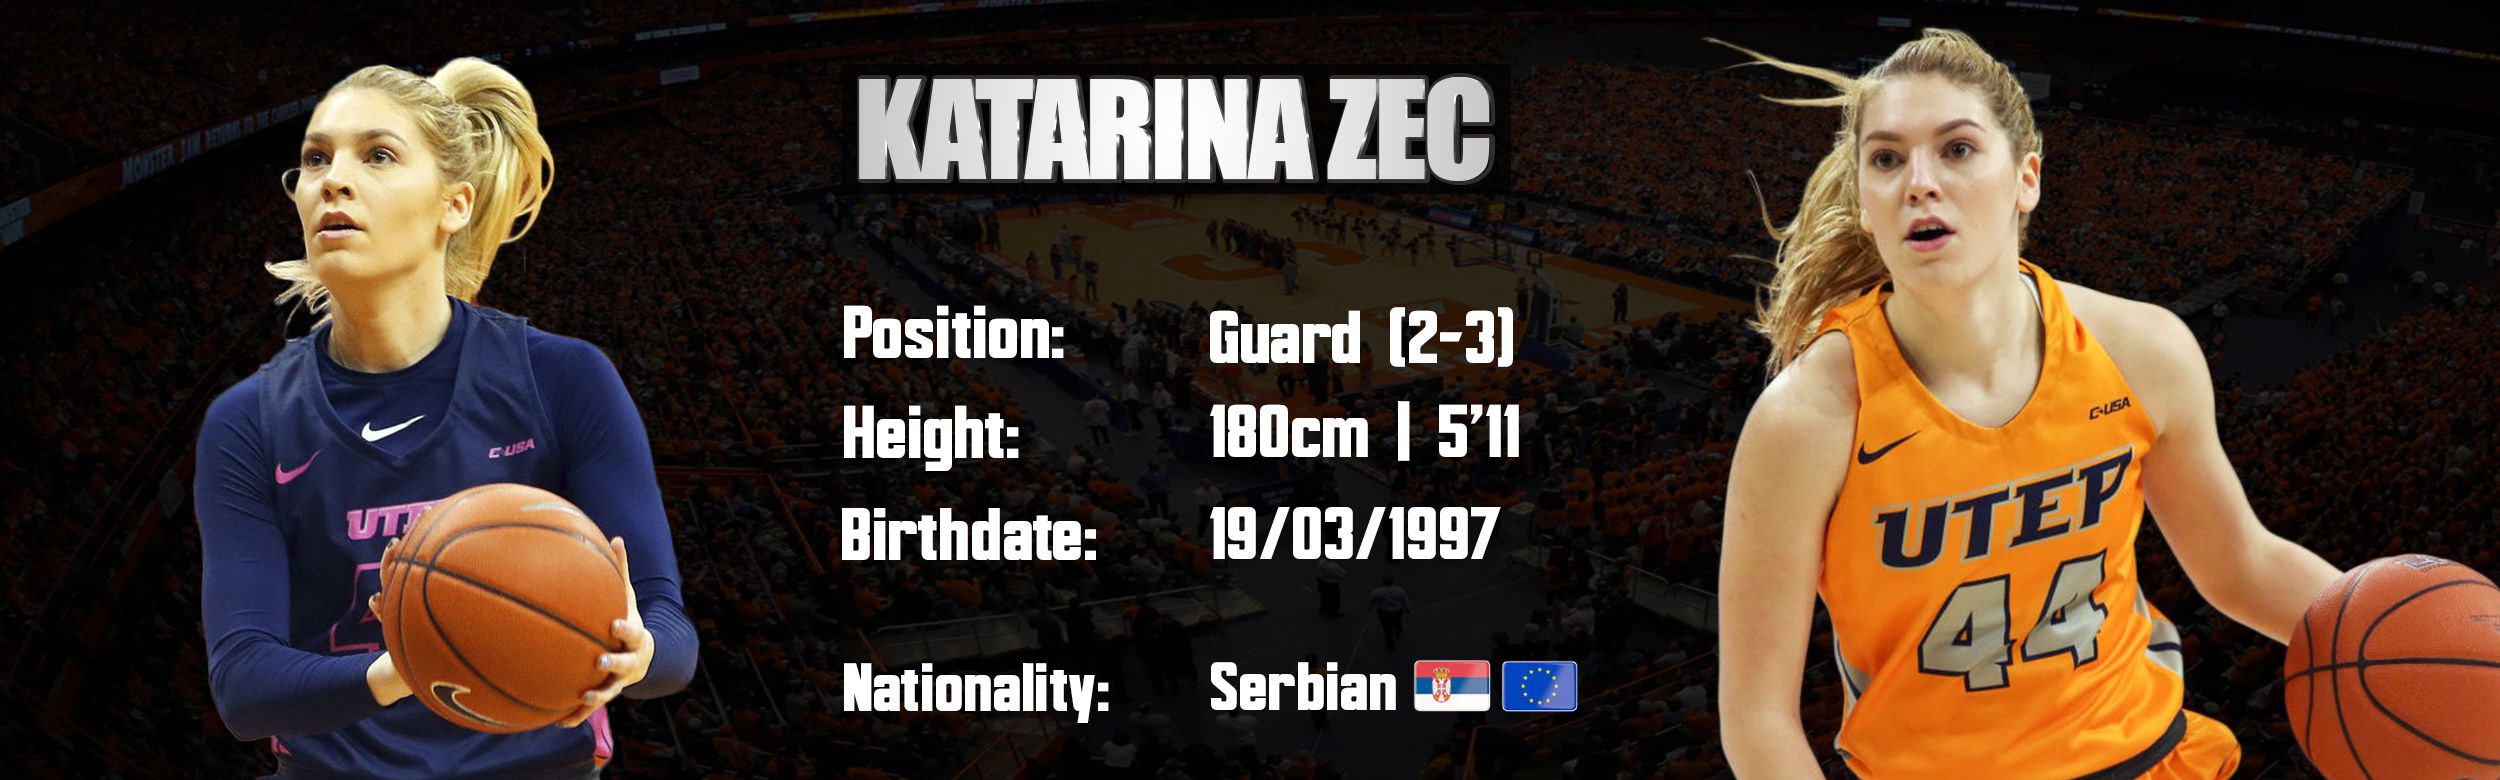 Katarina Zec